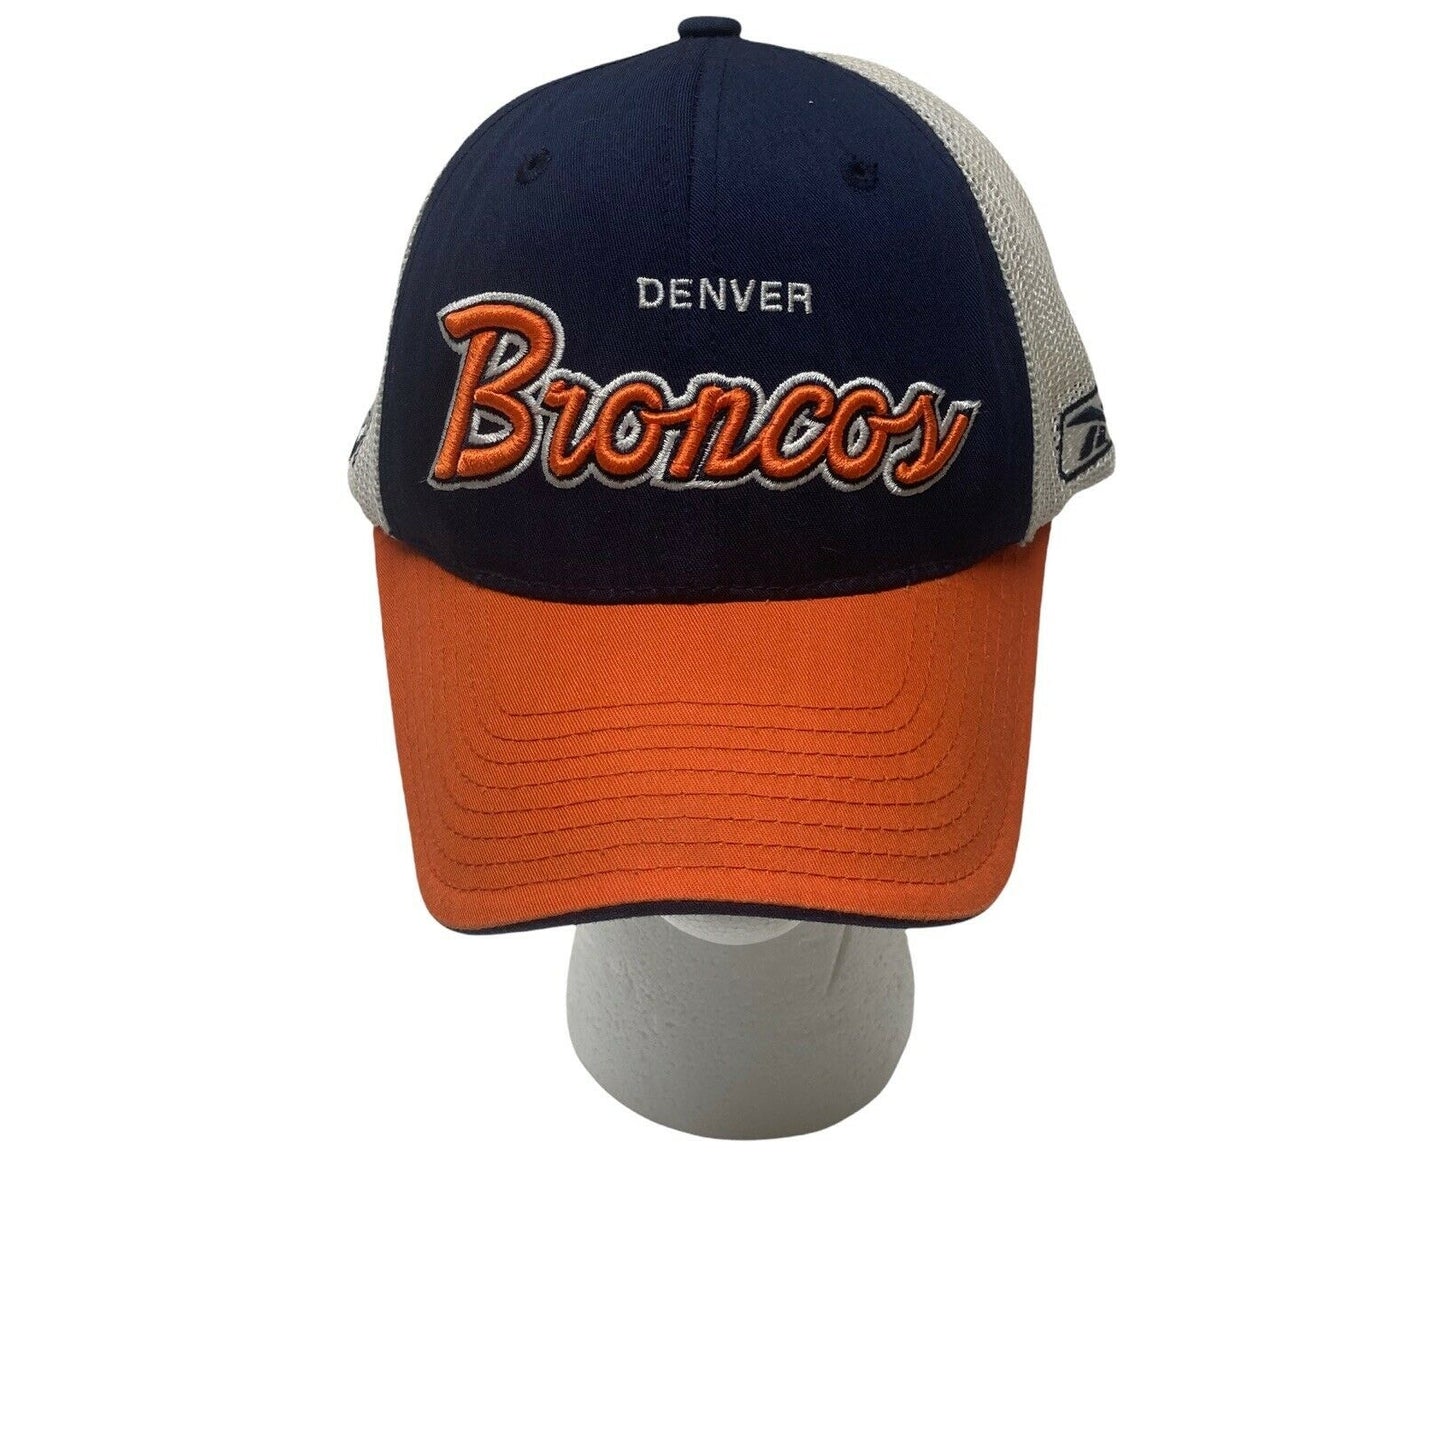 Reebok NFL Denver Broncos Mesh Snapback Vintage Hat Cap Football